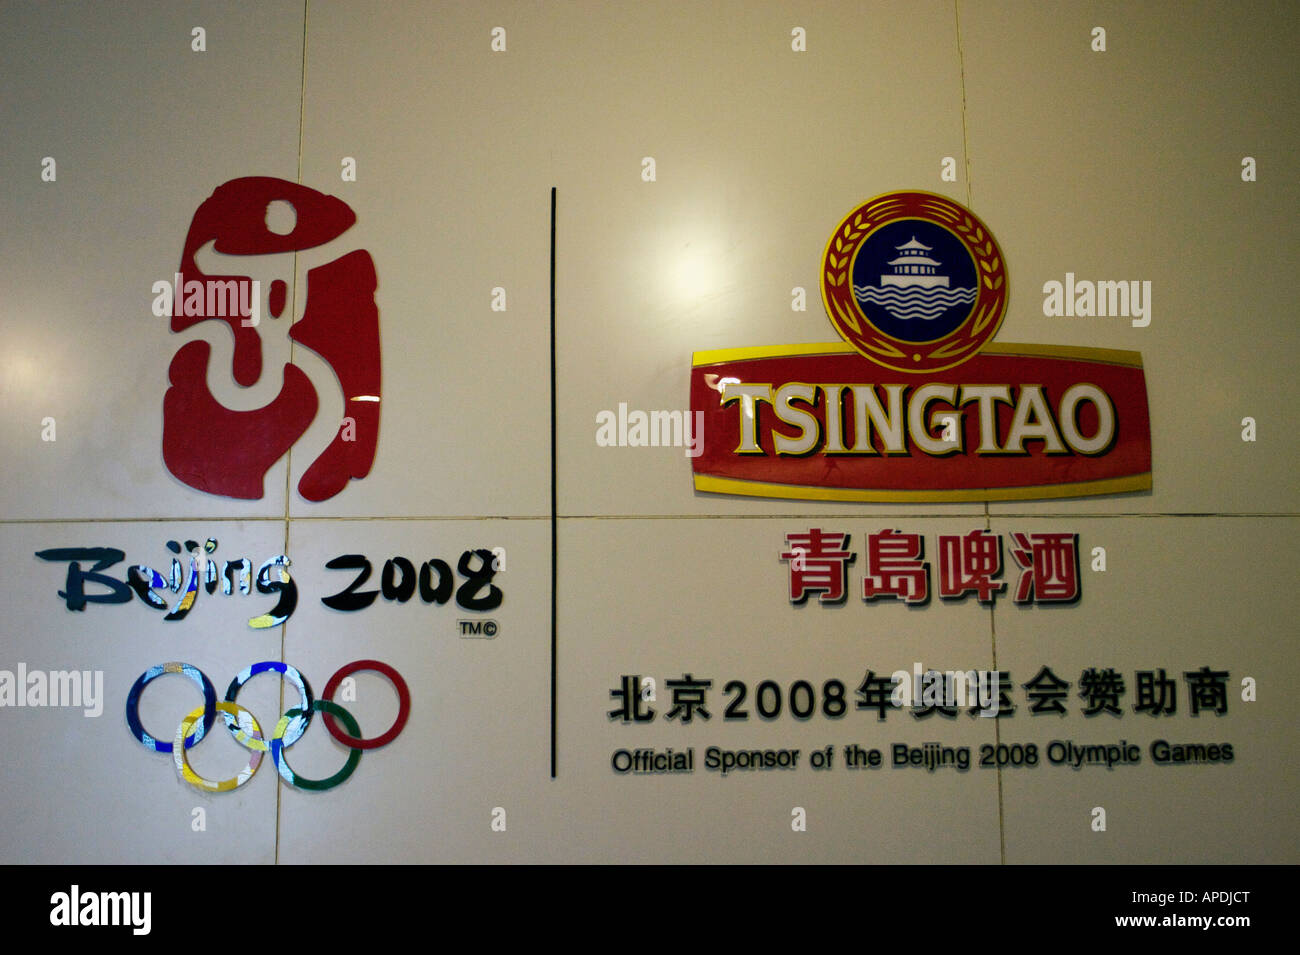 Tsingtao beer is an official sponsor of the Beijing 2008 Olympics Tsingtao brewery museum Qingdao Shandong China Stock Photo